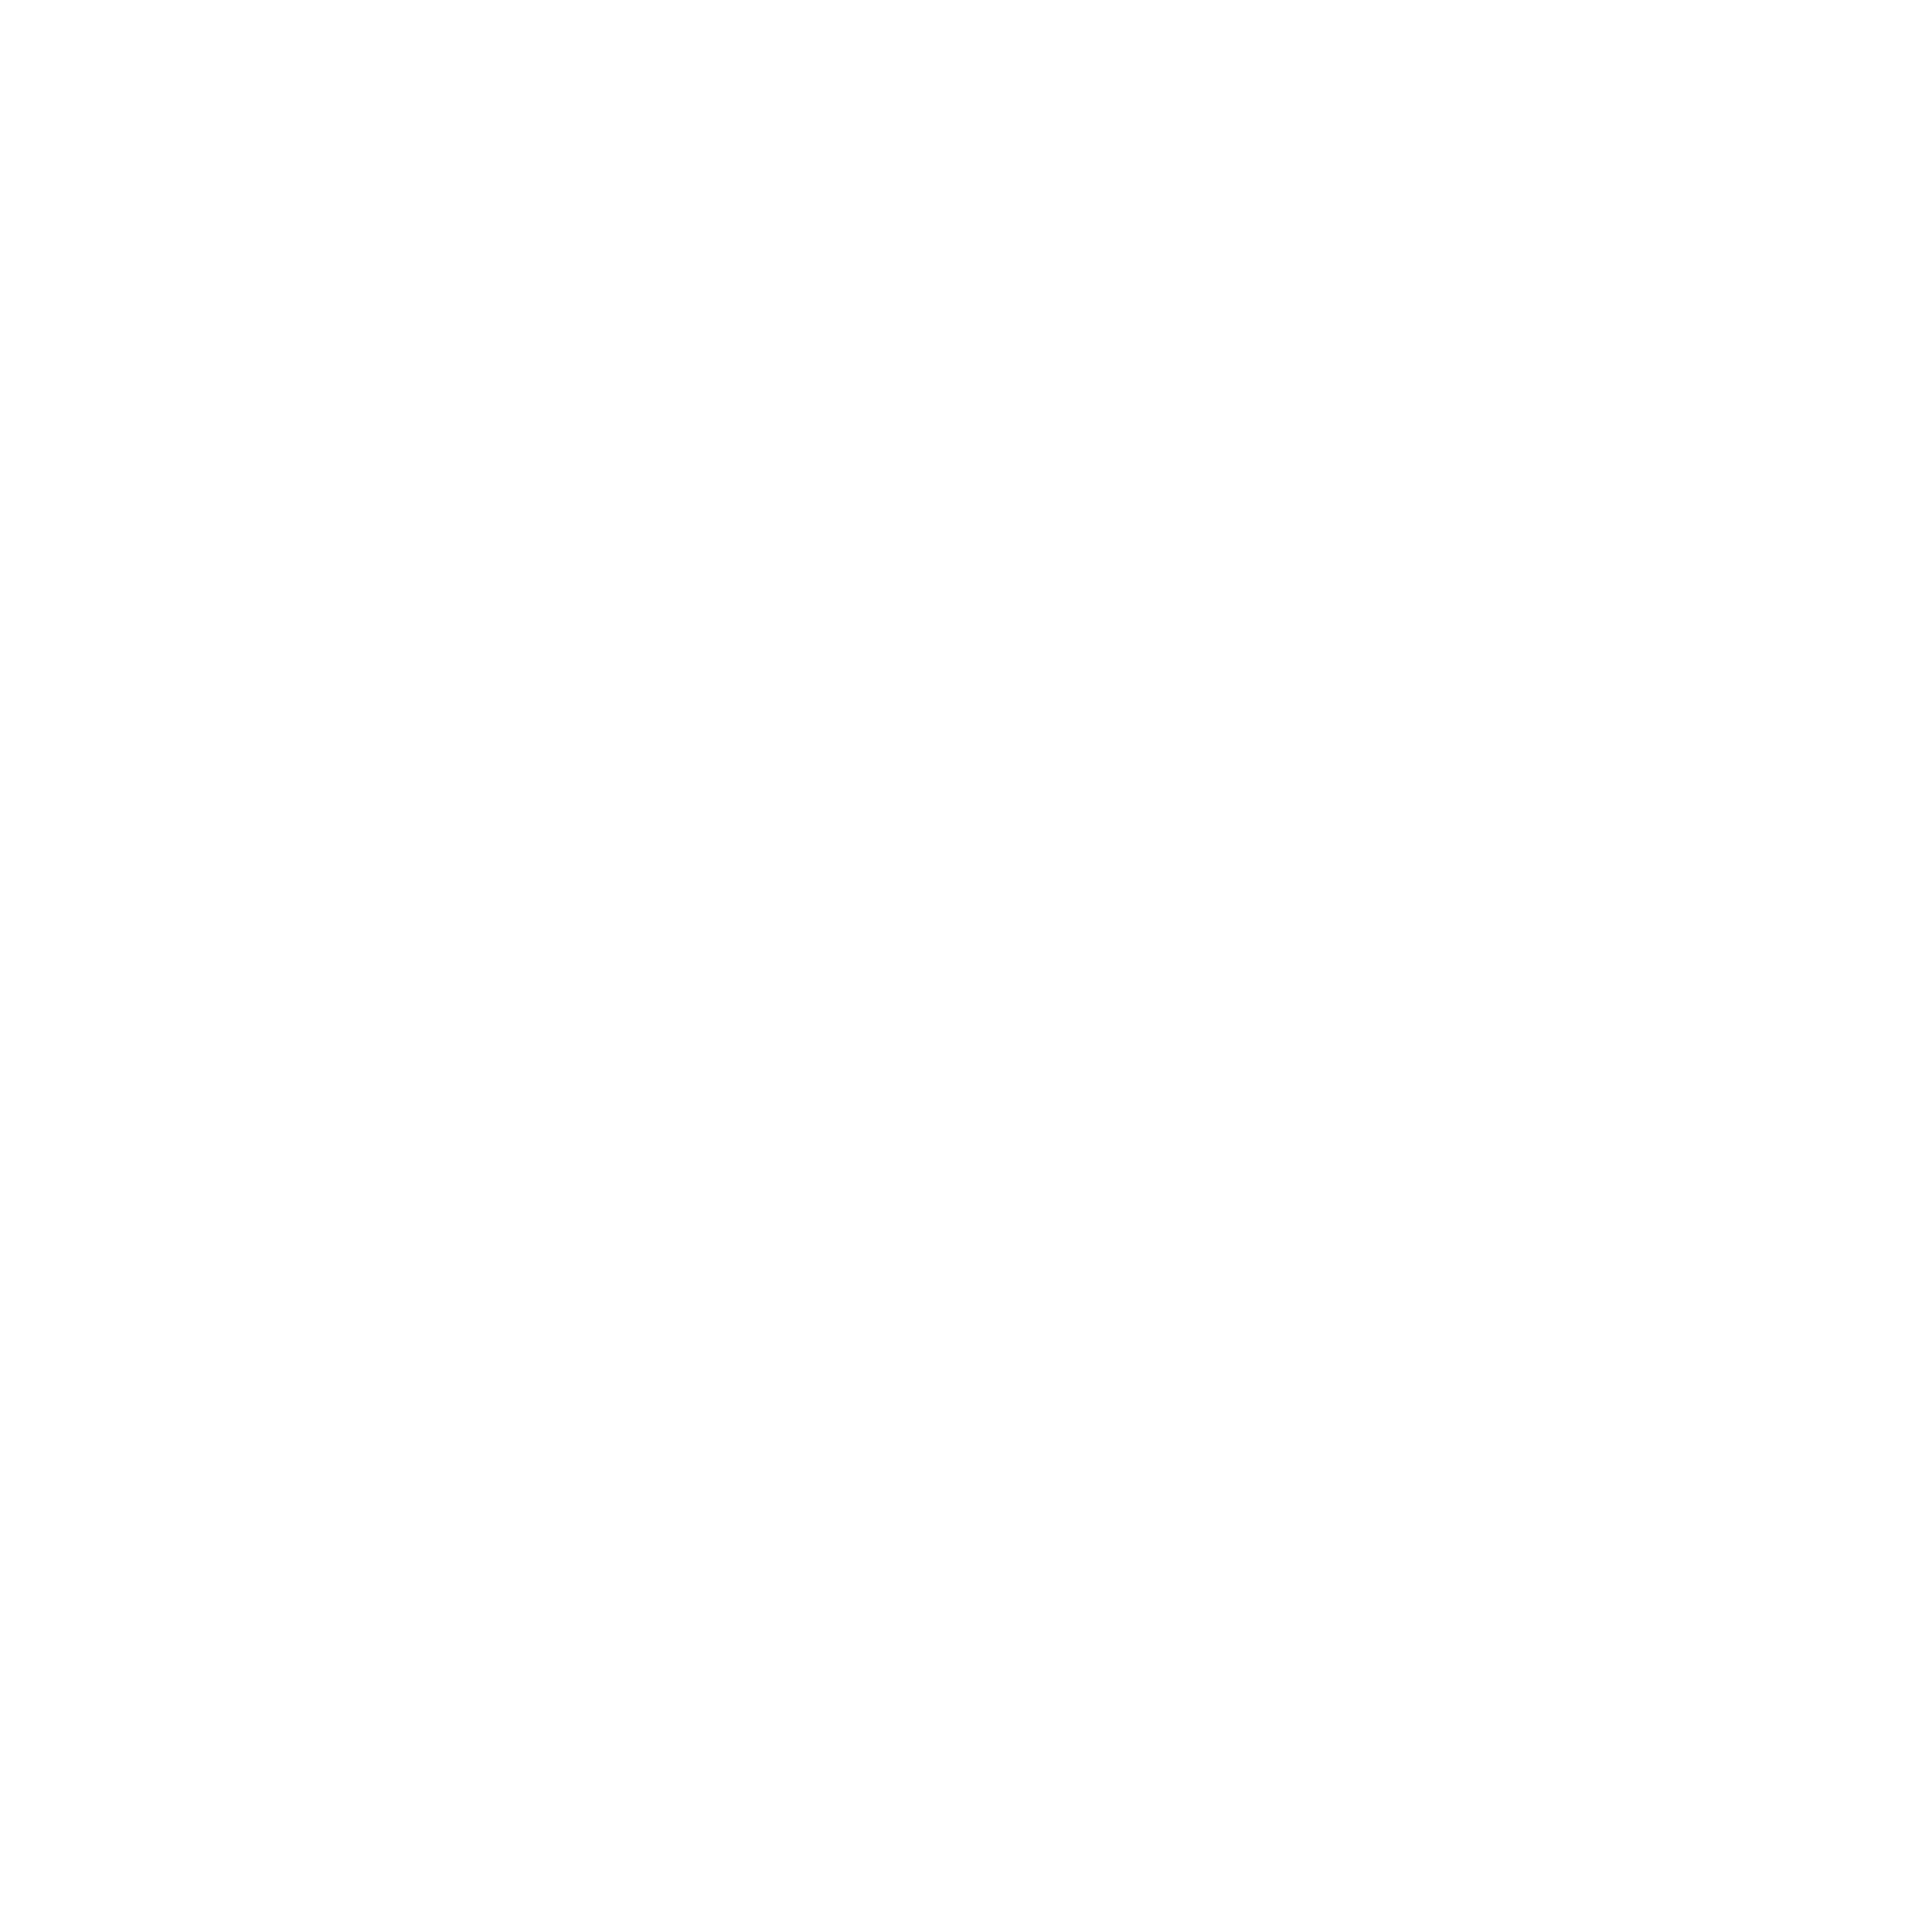 saks-fifth-avenue-2-logo-png-transparent copy.png